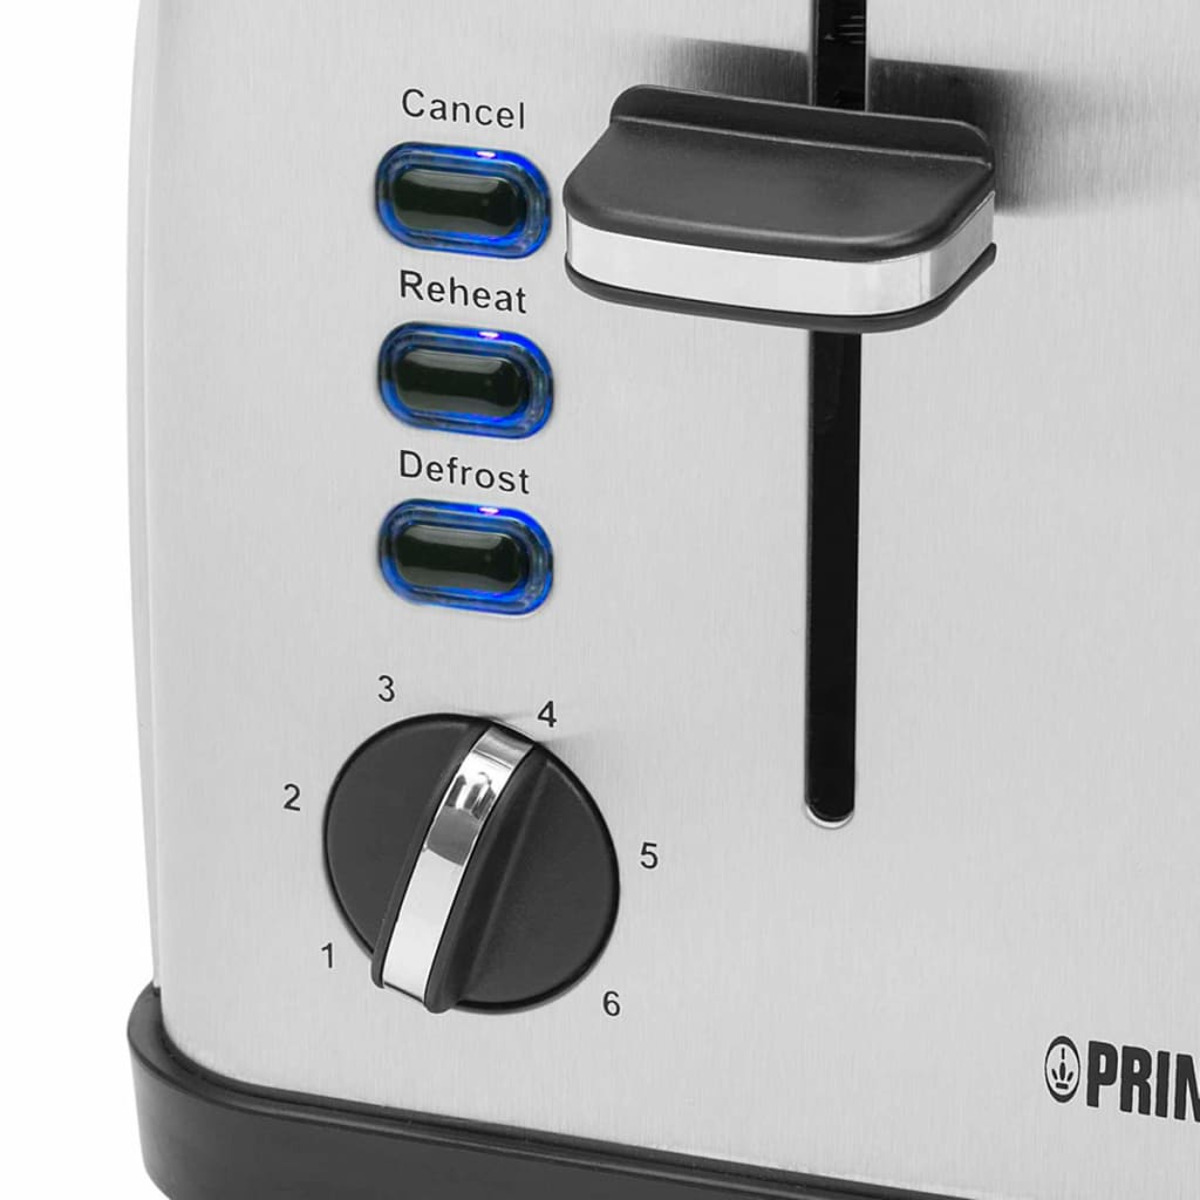 418383 (920 2) Grau PRINCESS Toaster Watt, Schlitze: